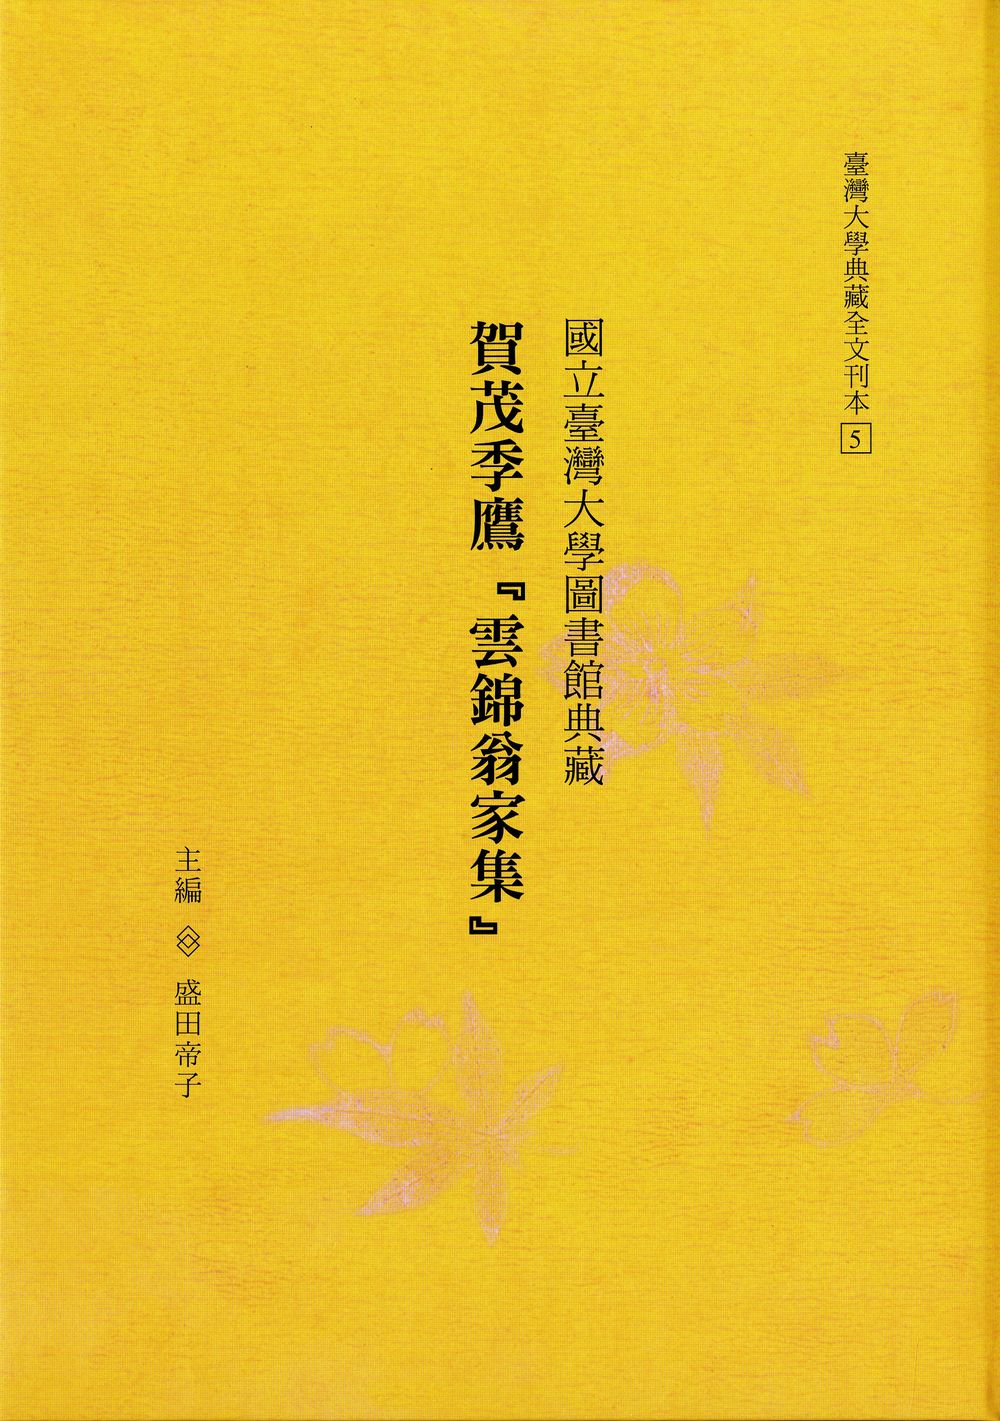 Unkinoo-kashu:A Collection of Waka Poems by Kamono Suetaka, Housed at National Taiwan University Library: Facsimile and Transcription